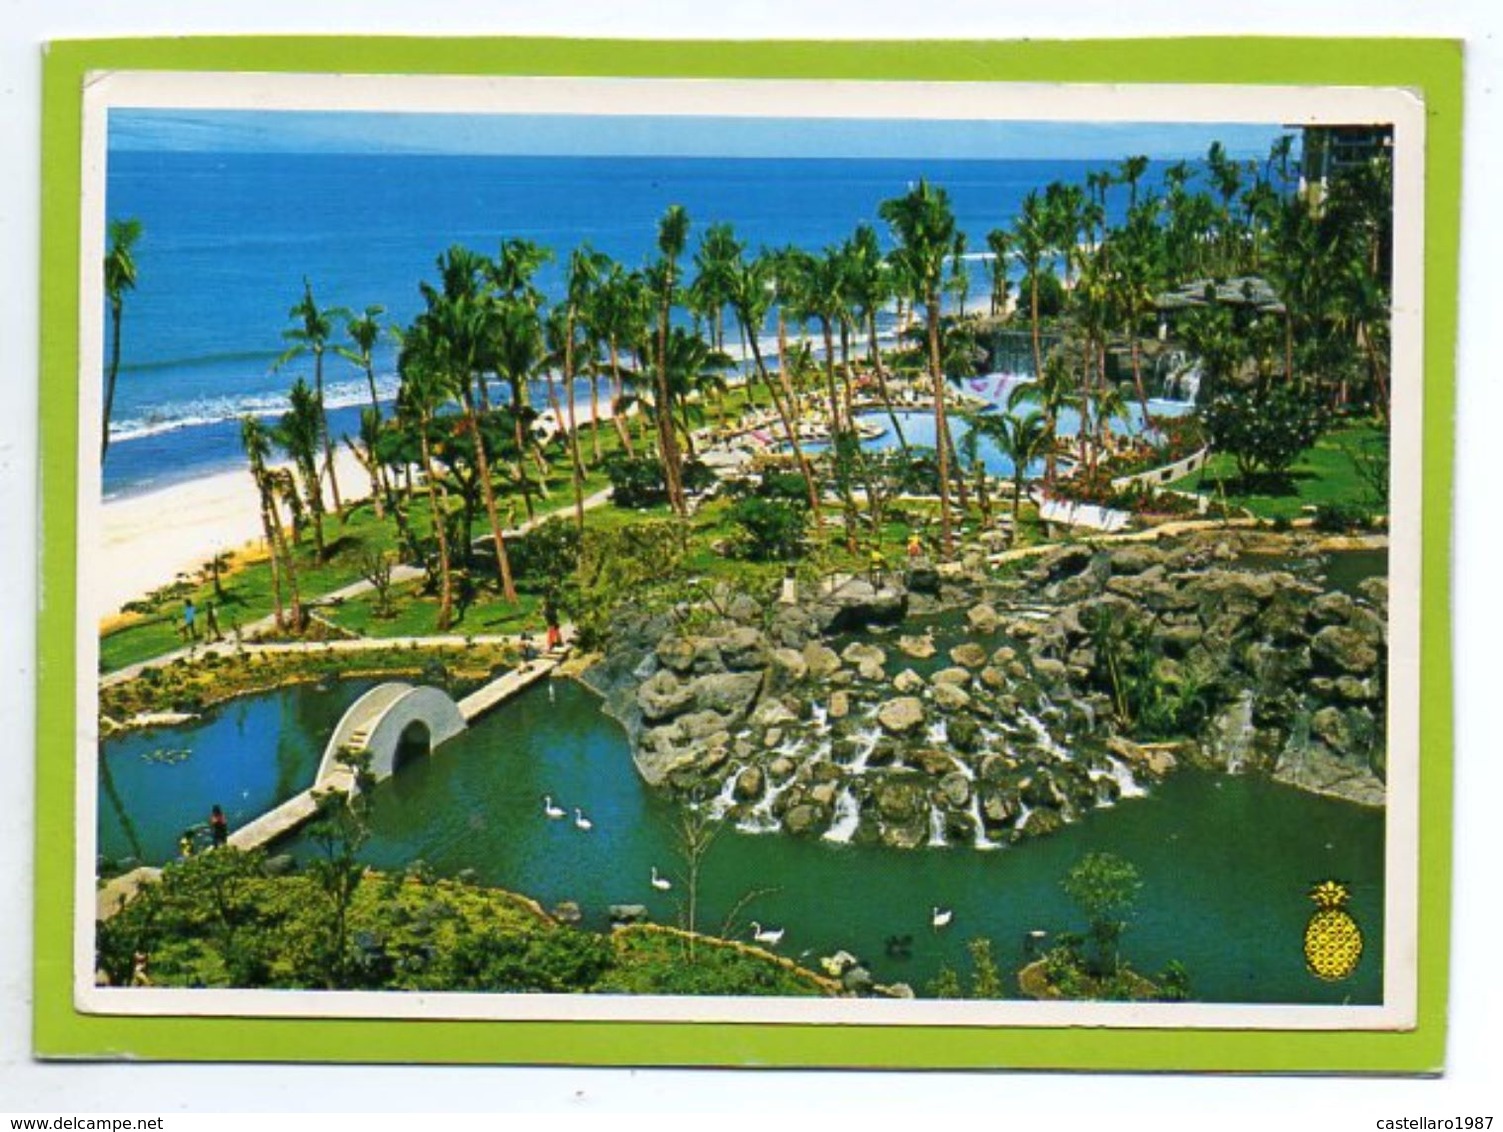 PANORAMIC VIEW OF THE FABULOUS NEW HYATT REGENCY HOTEL MAUI ON WORLD FAMOUS KAANA PALI BEACH - ISLAND OF MAUI, HAWAII - Maui